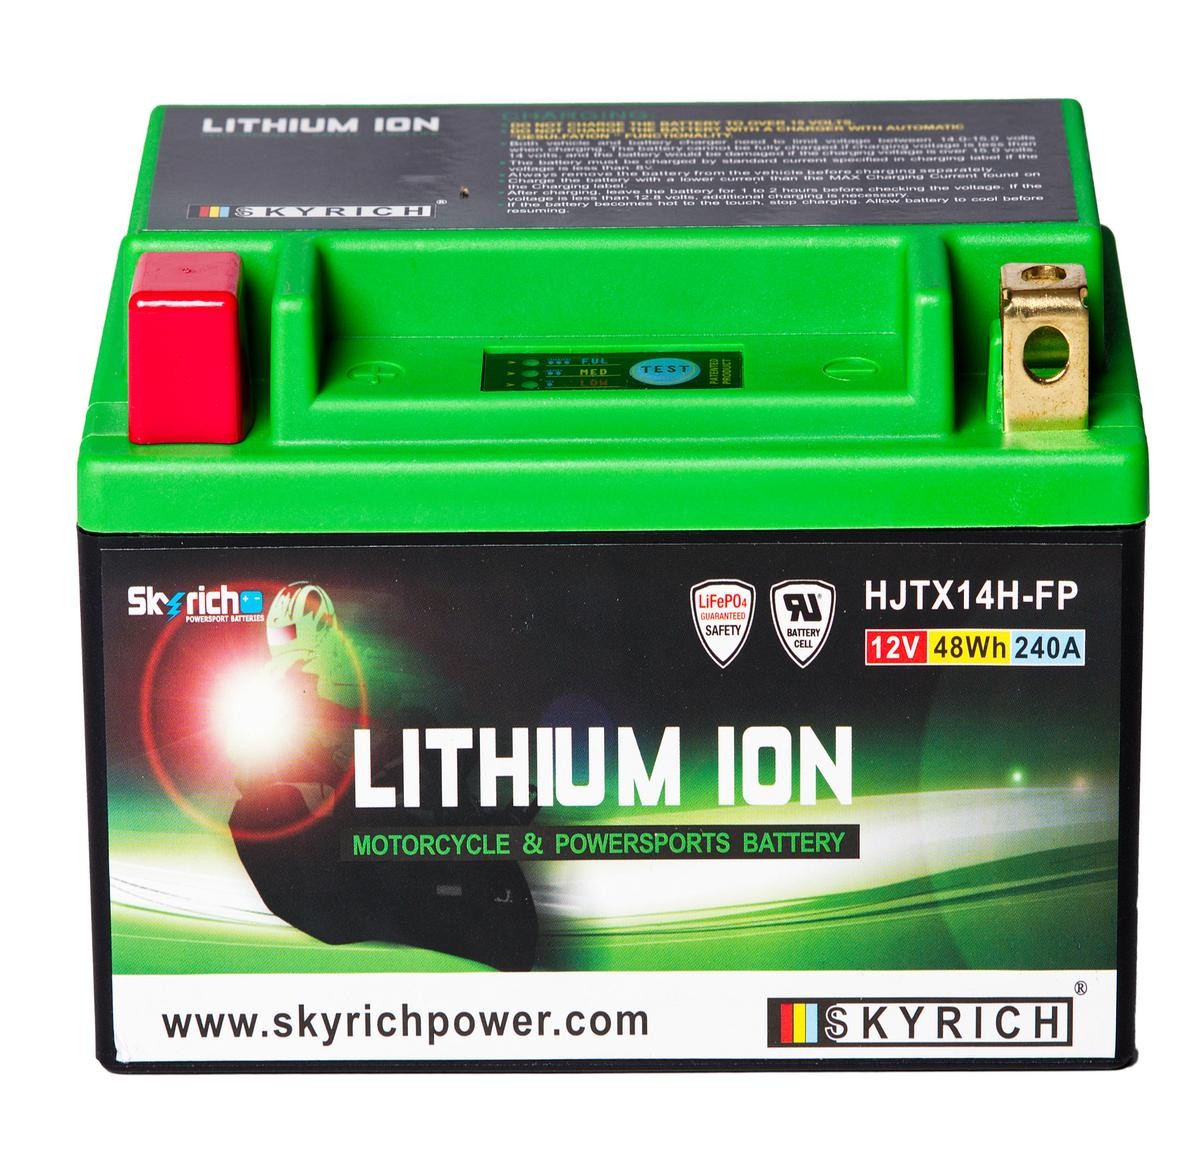 SWM SM Batterie 12V 4Ah 240A N Li-Ionen-Batterie SKYRICH LITHIUM ION HJTX14H-FP